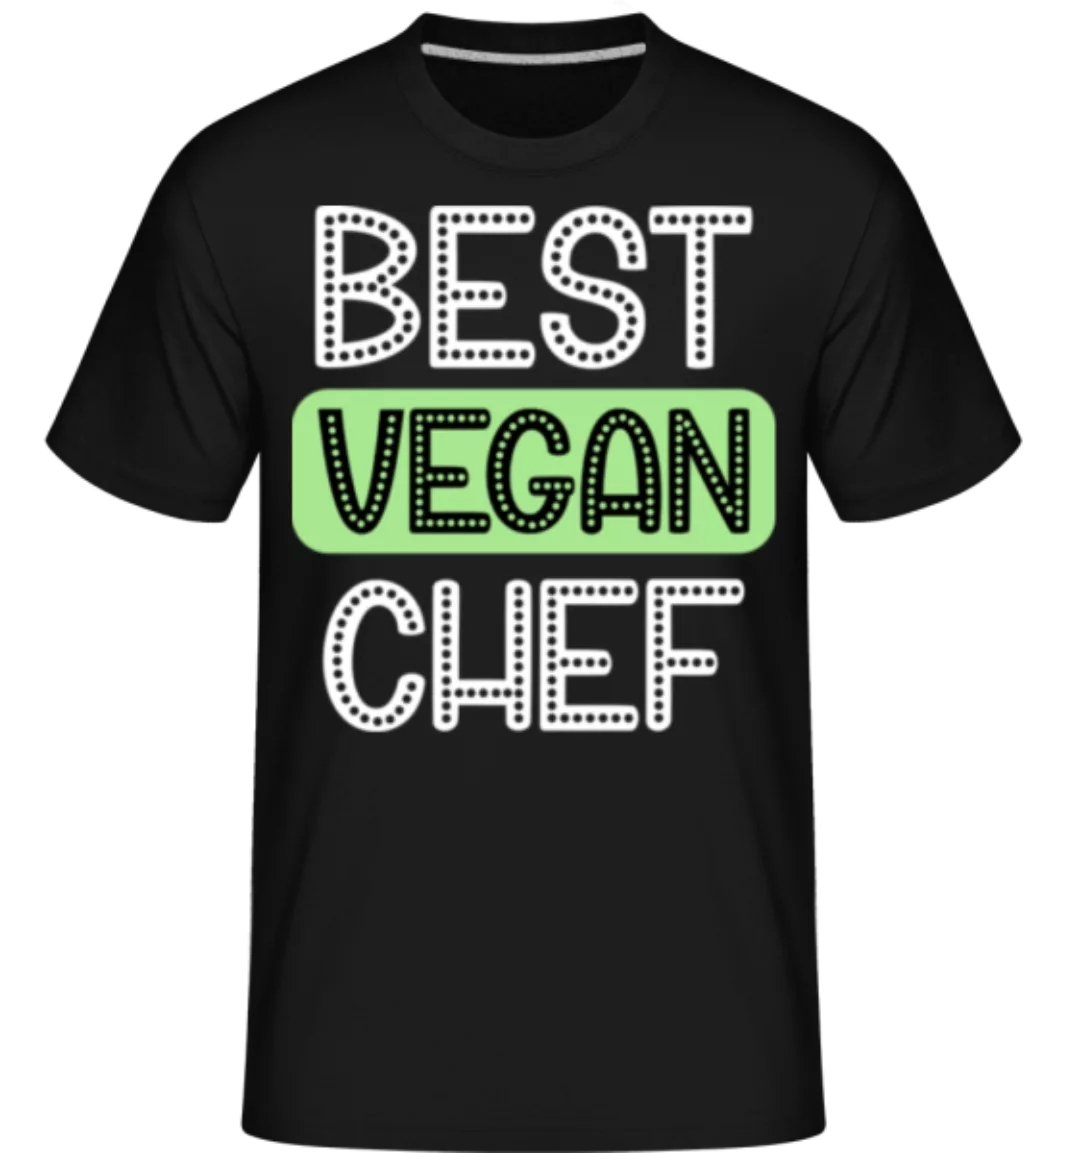 Best Vegan Chef · Shirtinator Männer T-Shirt günstig online kaufen